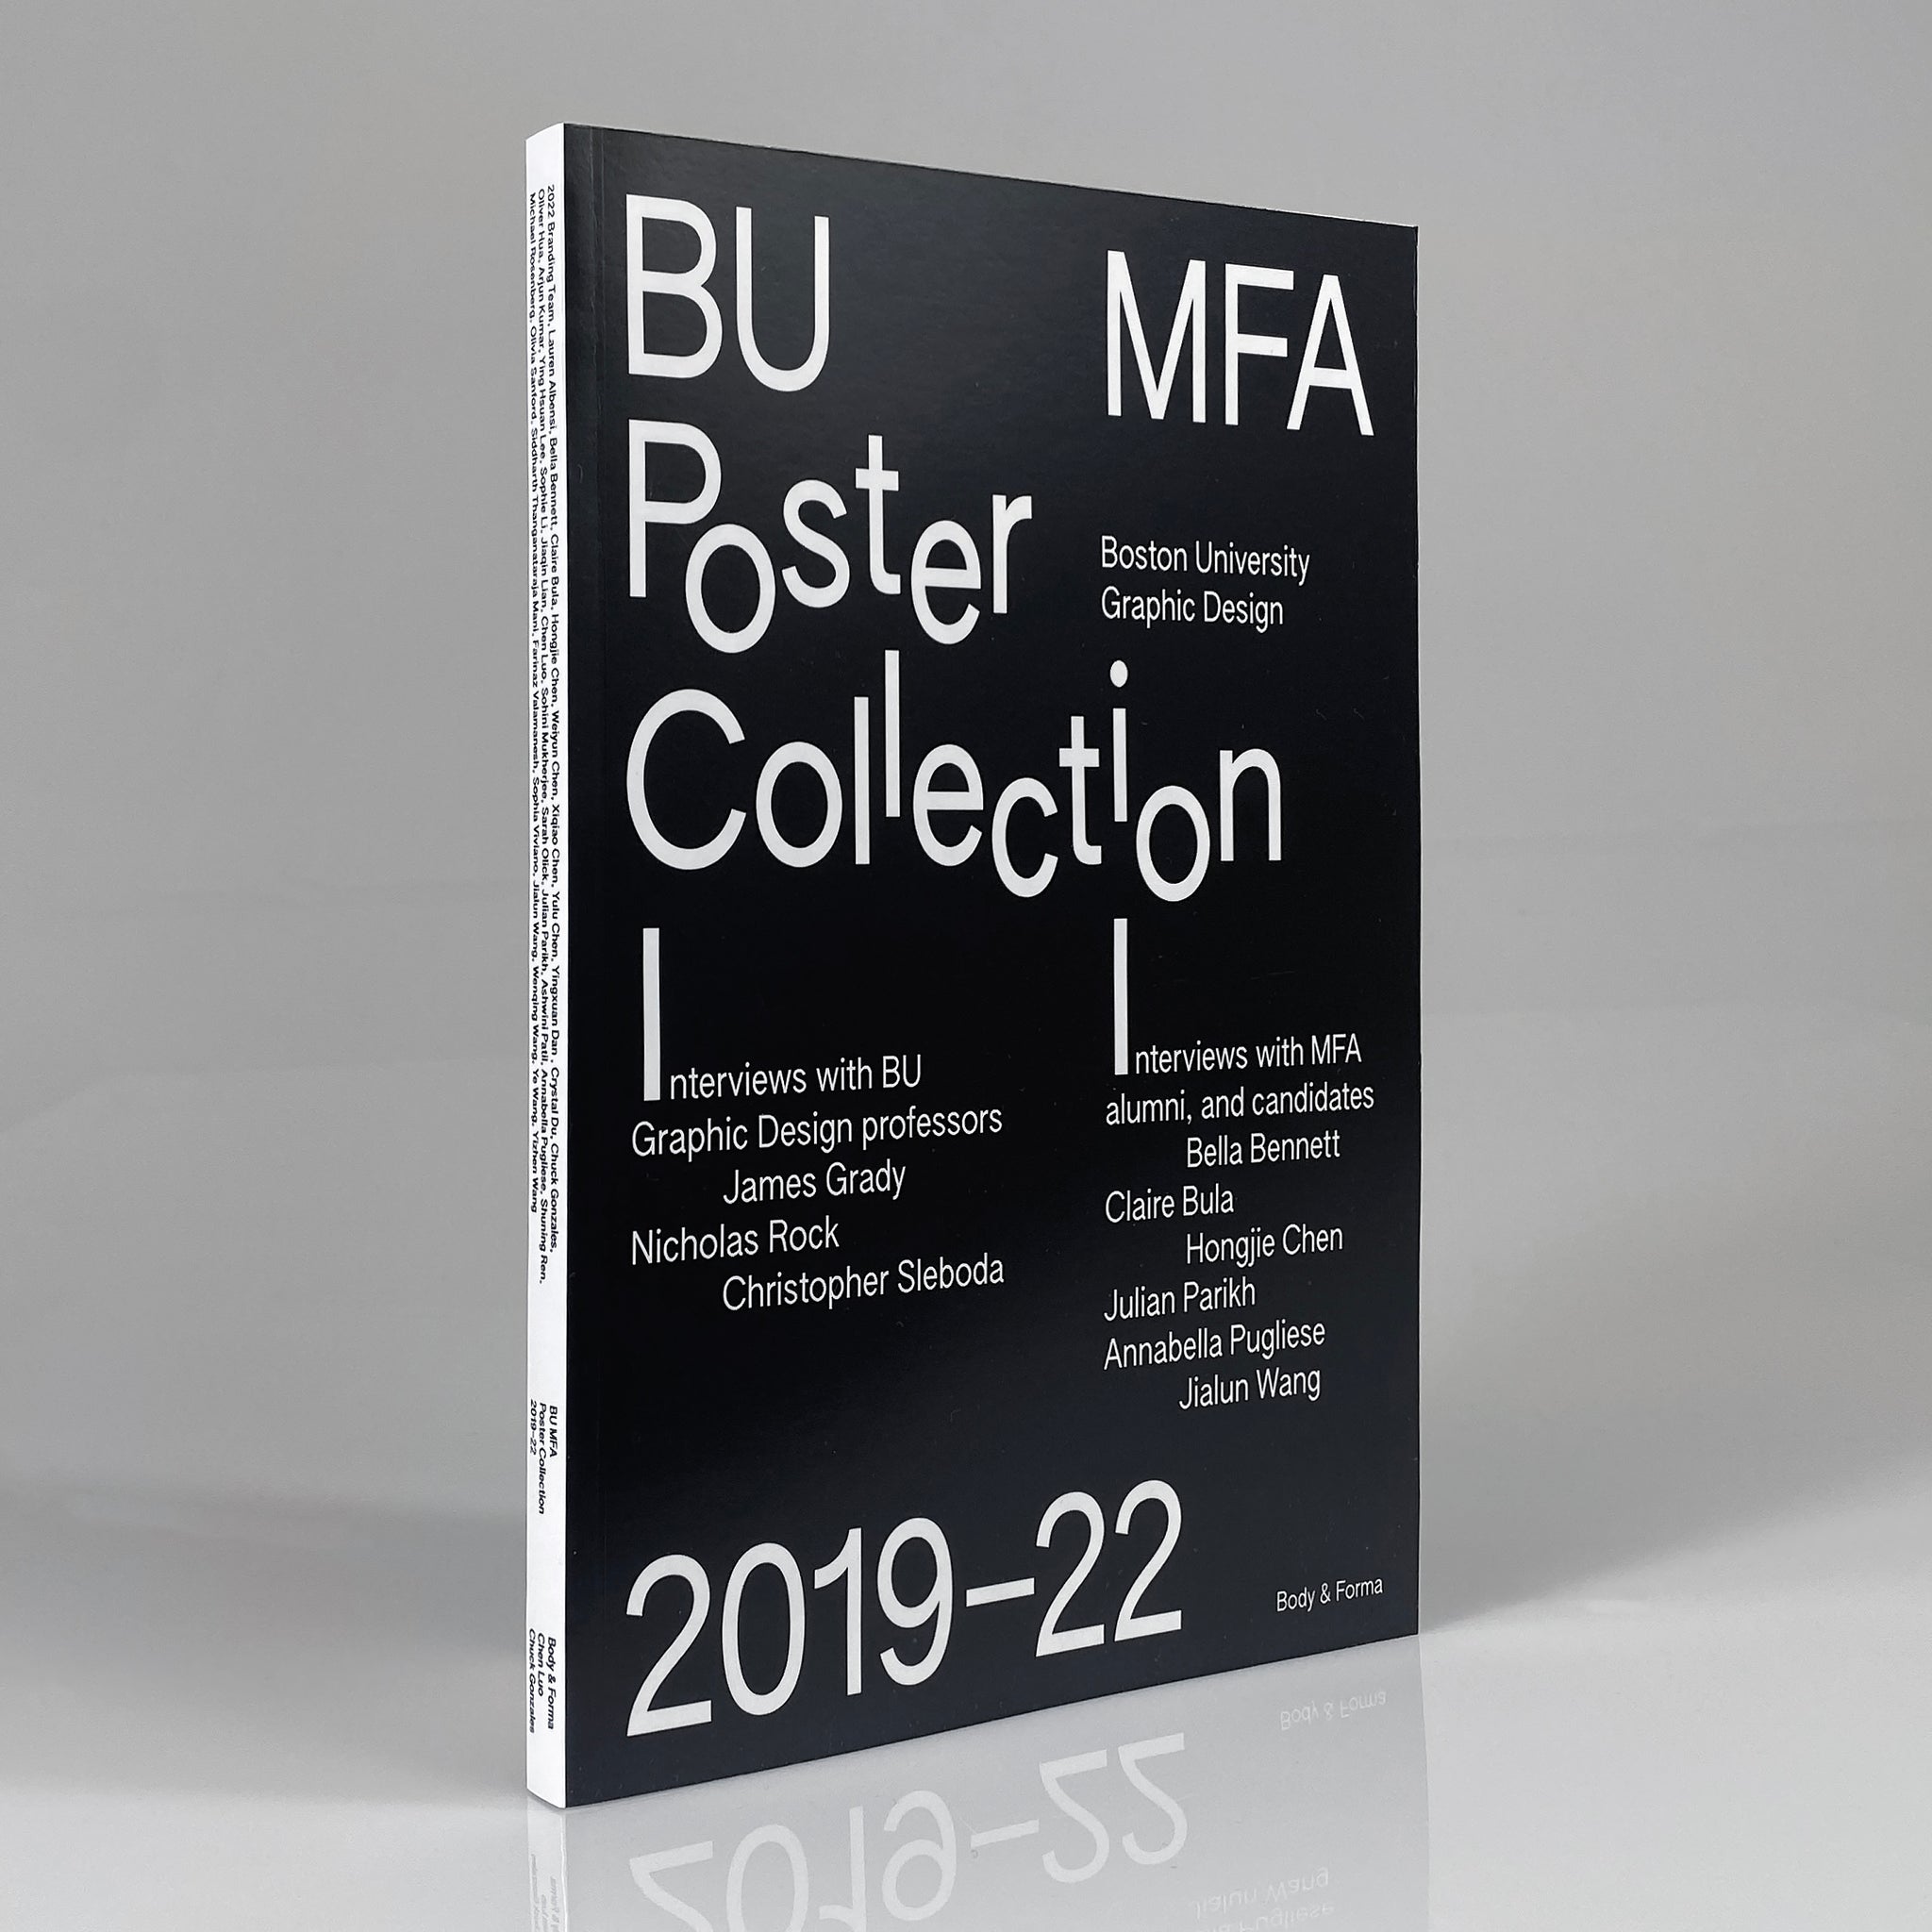 BU MFA Poster Collection, 2019-22